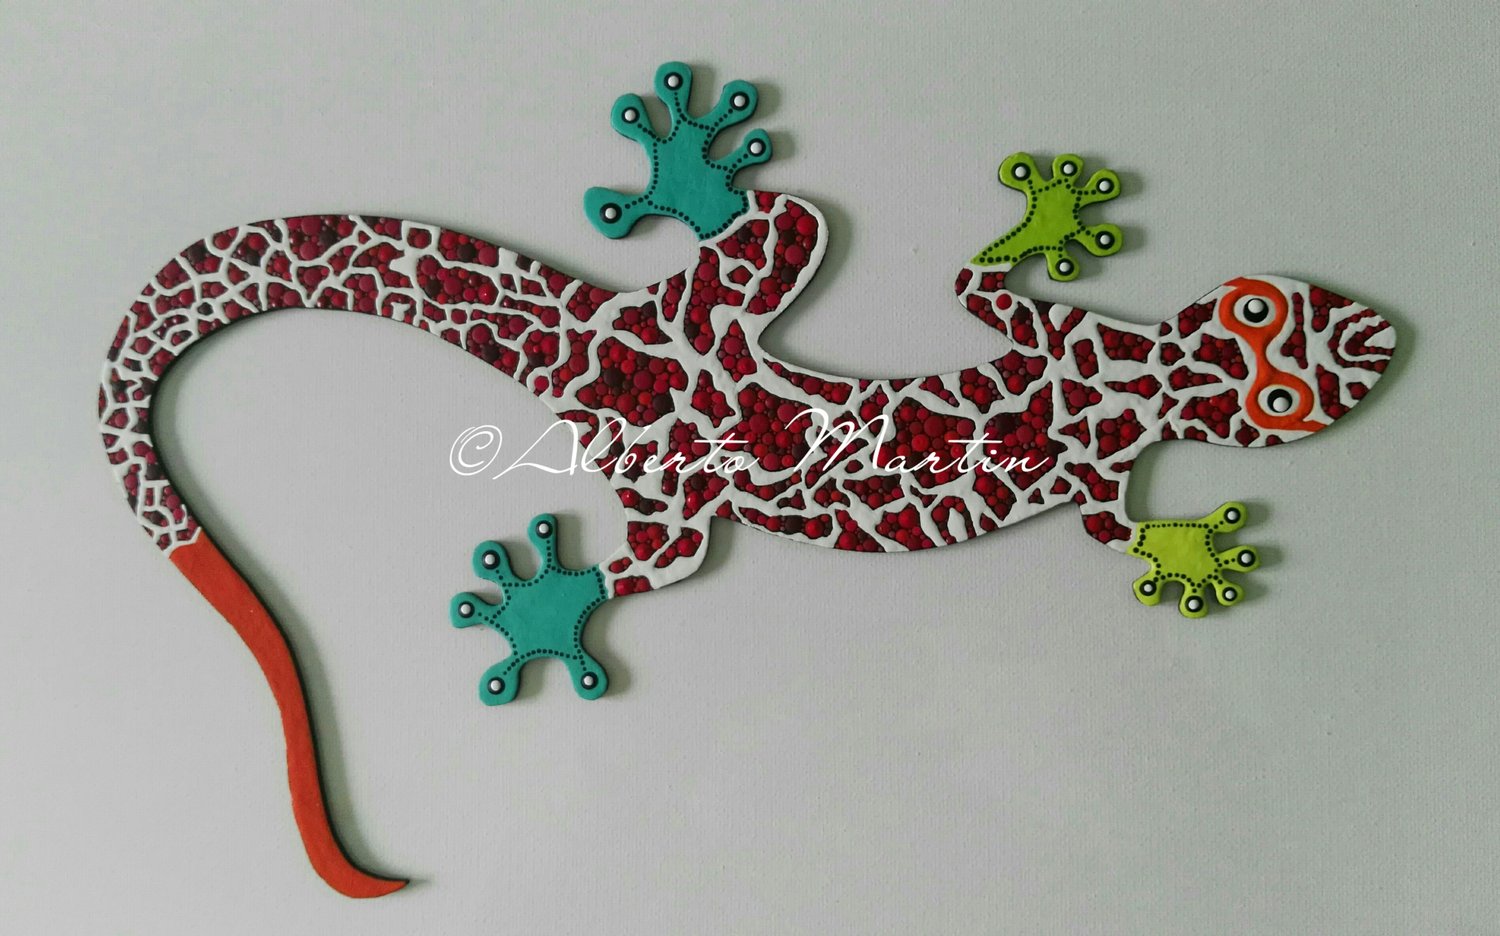 Image of Lizard - Gecko 3/ dot art mdf/ handpainted/ Gift ideas/ by Alberto Martin